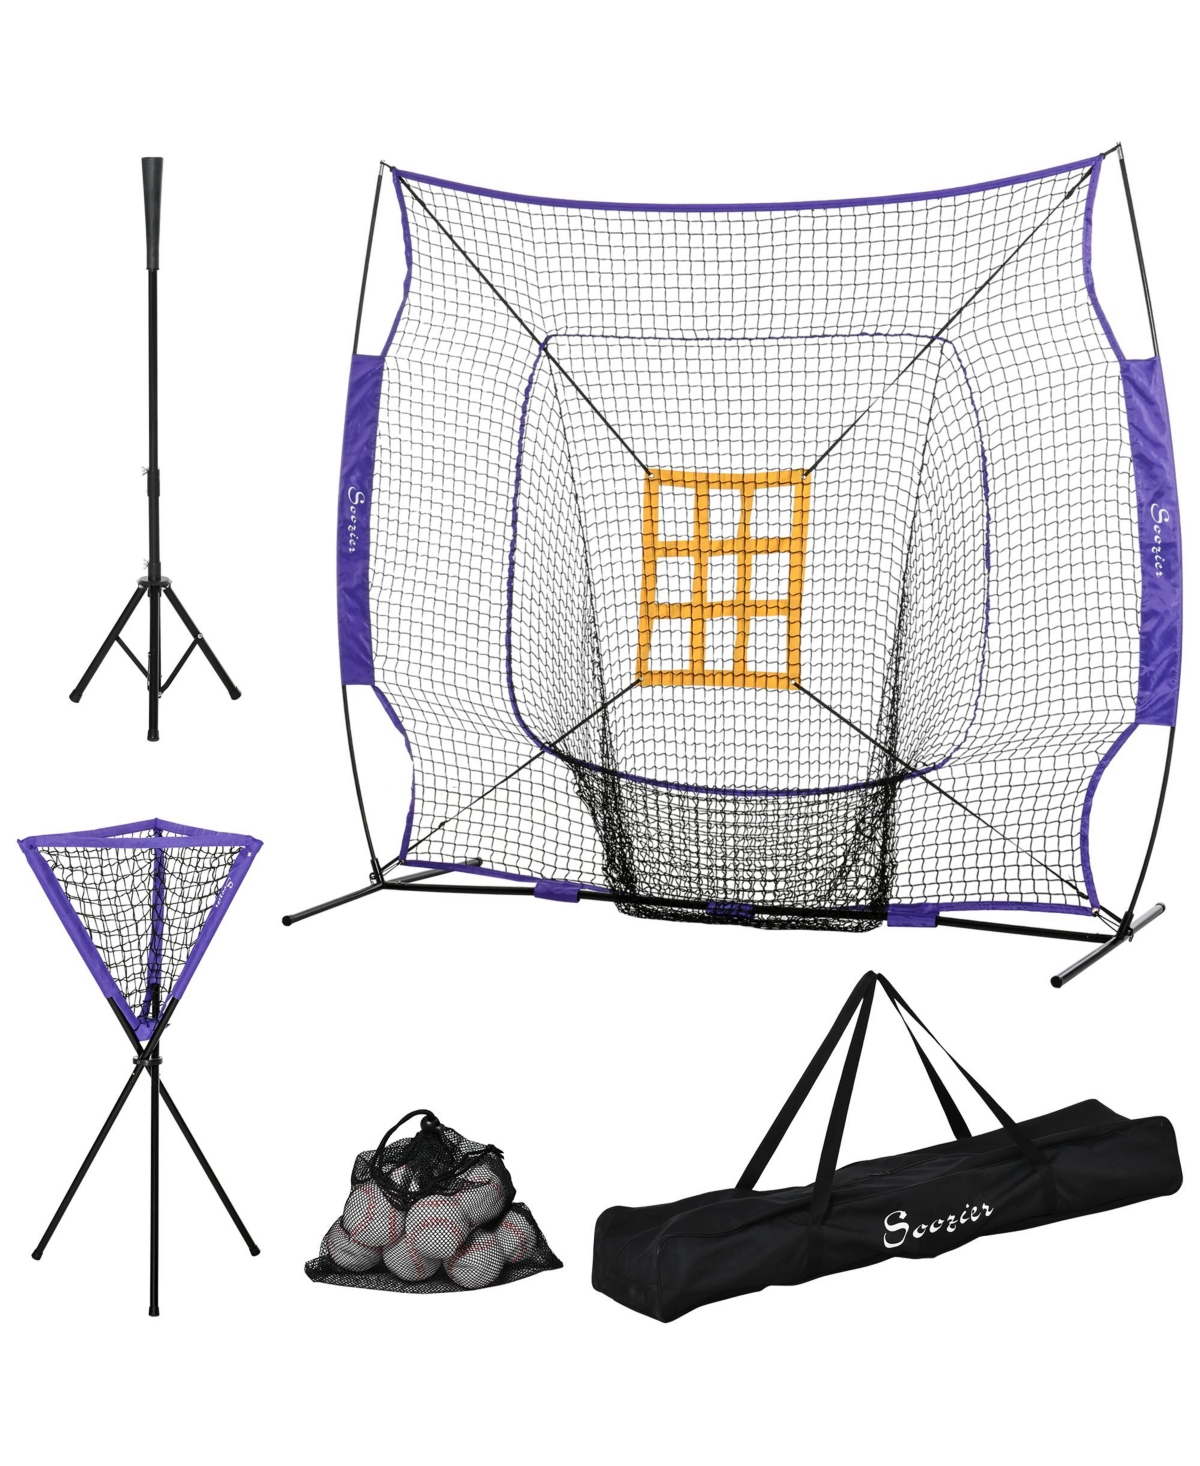 7.5'x7' Baseball Practice Net Set w/ Catcher Net, Tee Stand, 12 Baseballs for Pitching, Fielding, Practice Hitting, Batting, Backstop, Trainin